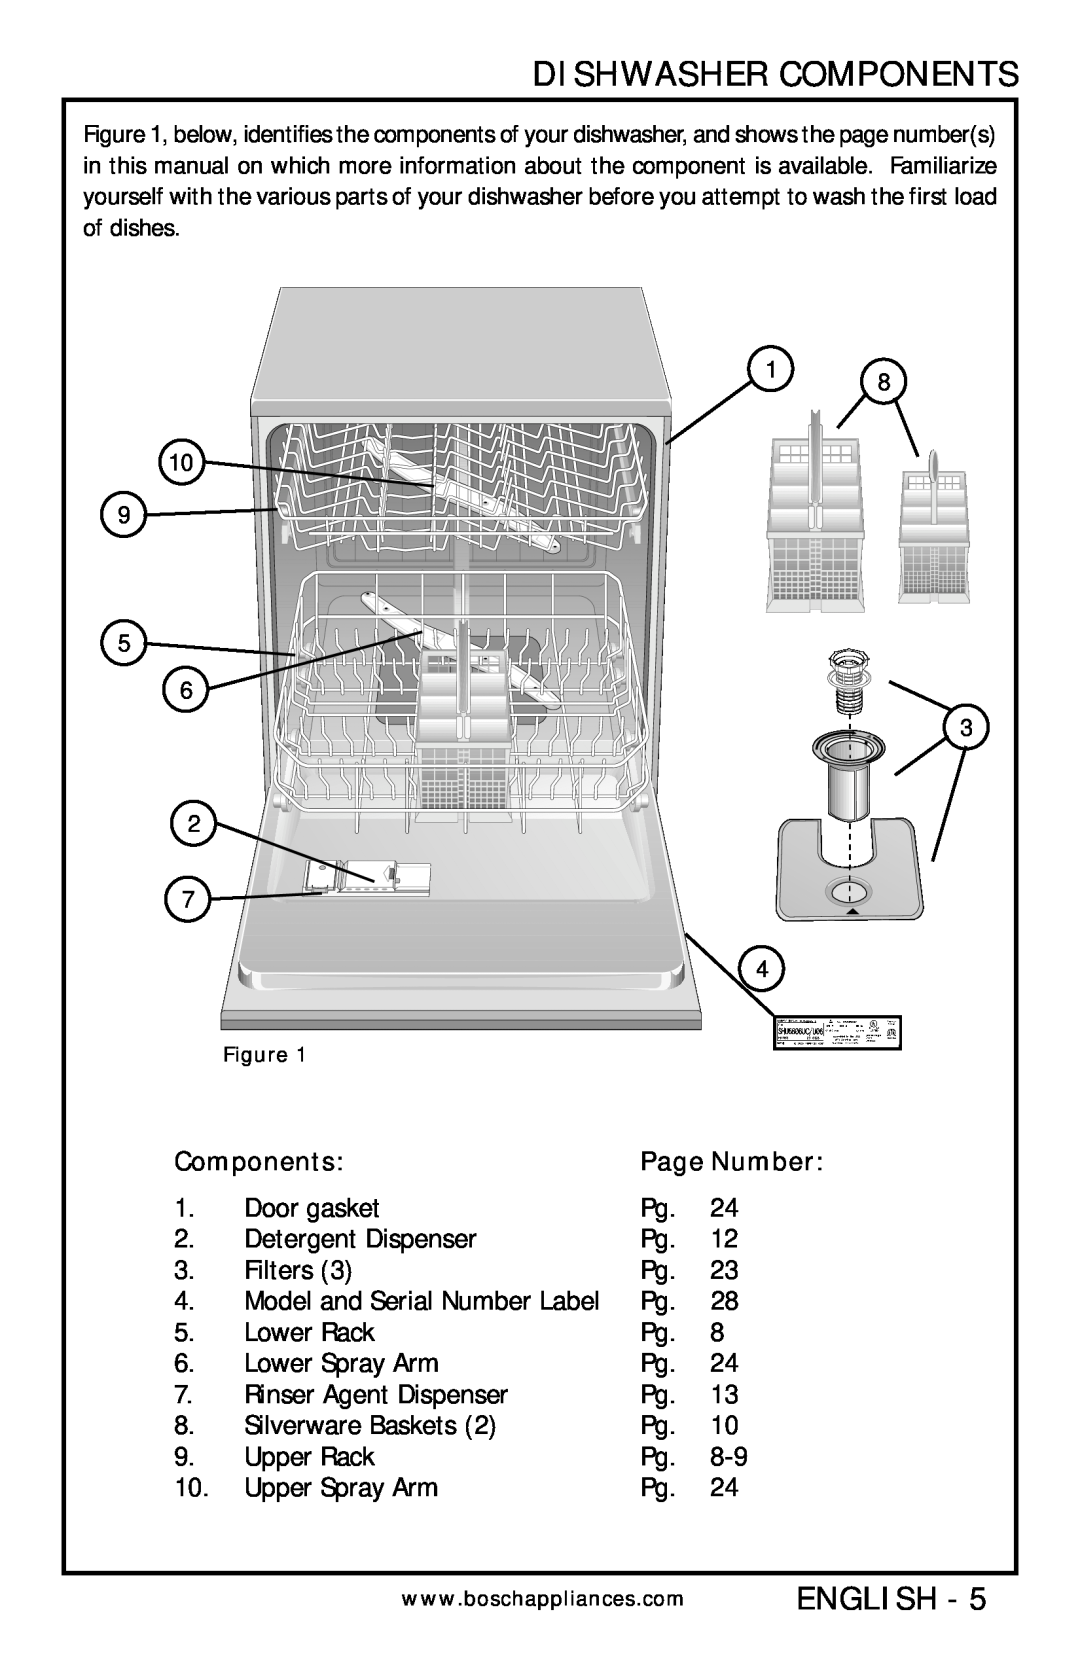 Bosch Appliances SHU 3300, SHV 4300, SHV 6800, SHV 4800, SHU 5300, SHU 9950, SHU 3131 manual Dishwasher Components, Page Number 